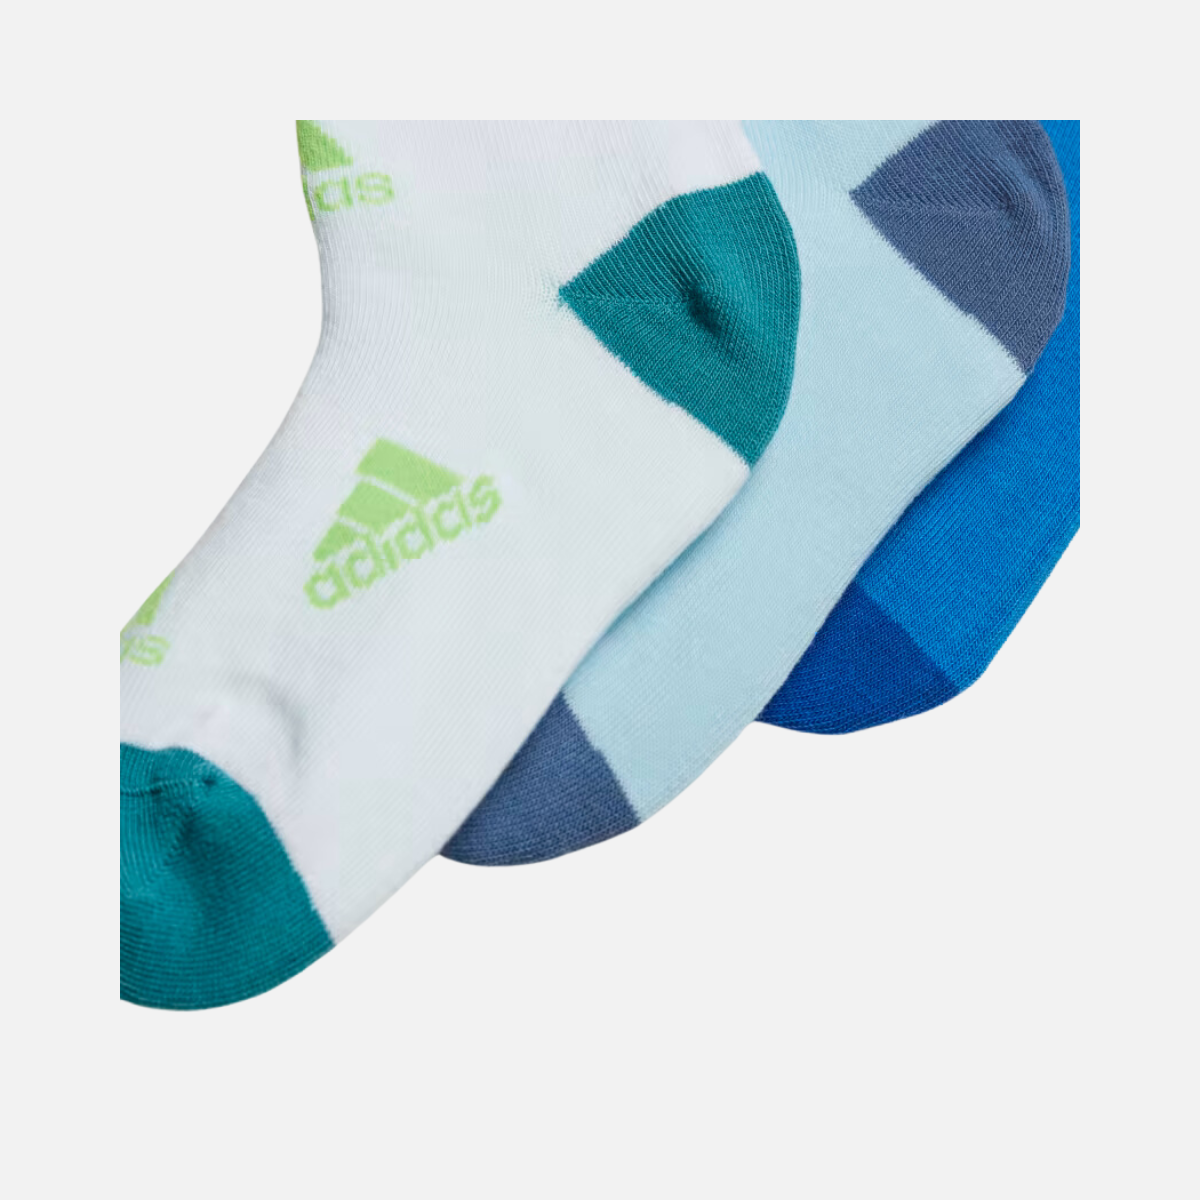 Adidas Kids Unisex 3 Pairs Printed Training Socks -White/Black/Medium Gray Heather